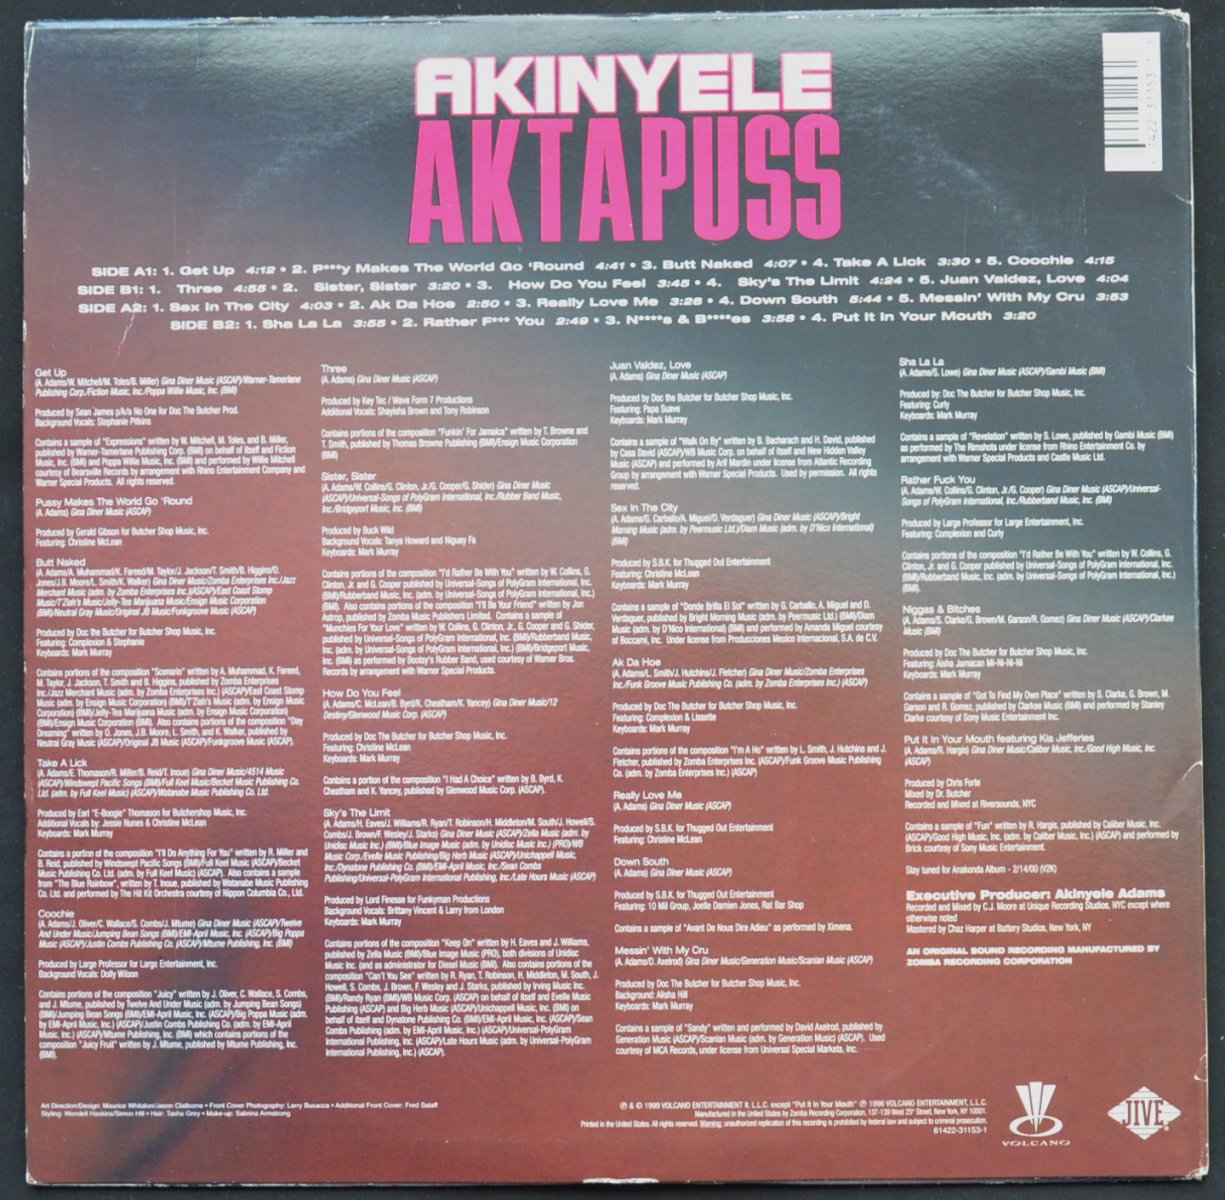 AKINYELE ‎/ AKTAPUSS (2LP) - HIP TANK RECORDS